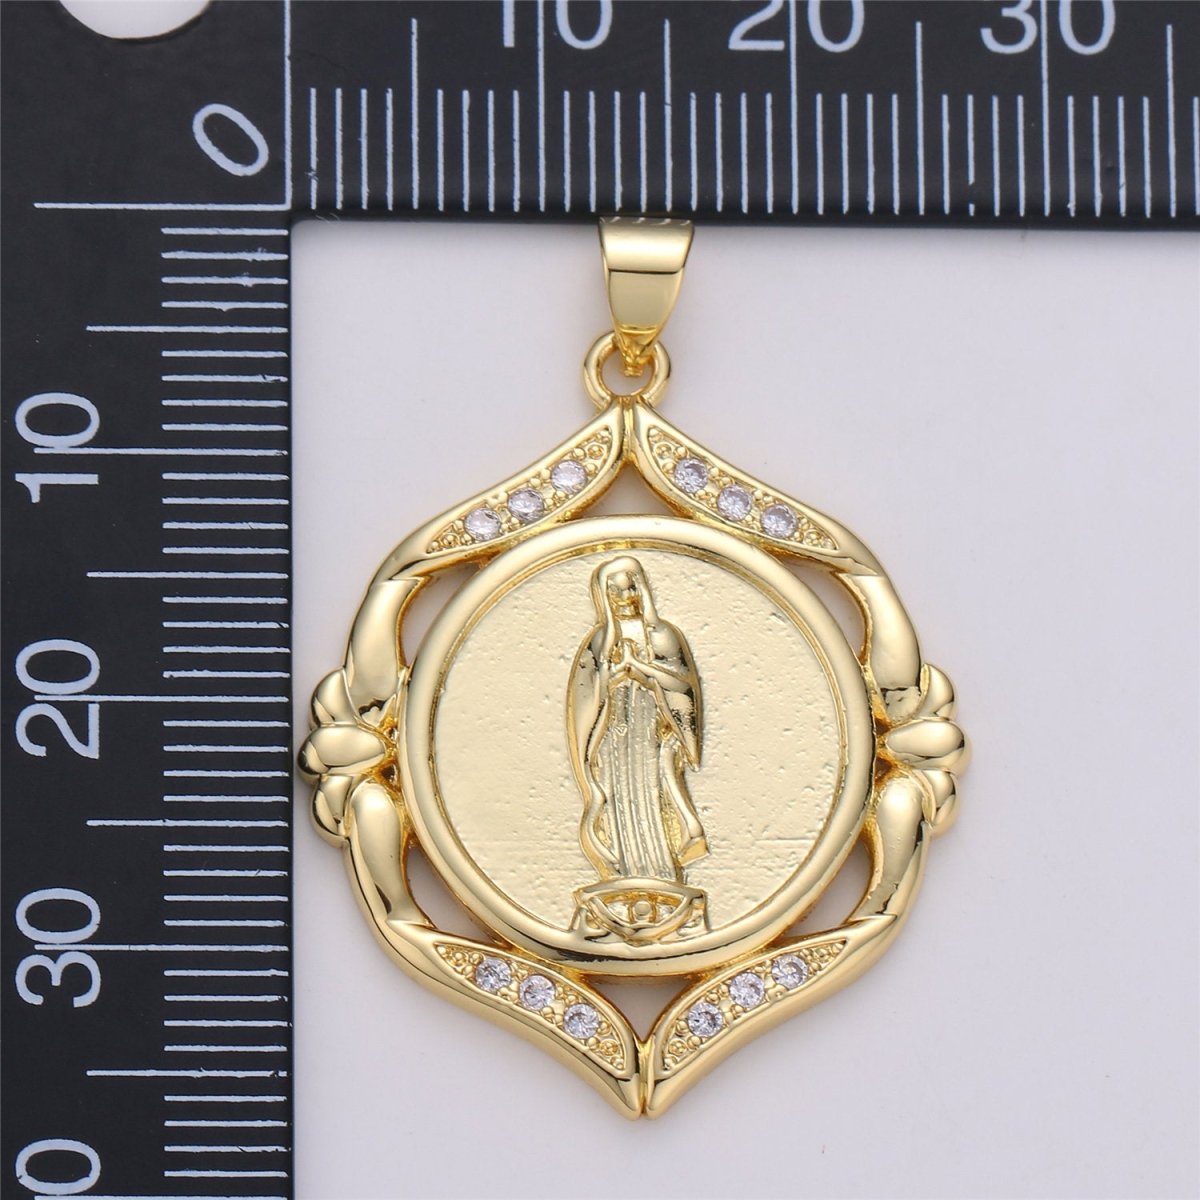 24k Gold Filled Virgin Mary Medallion Scalloped Edge 26mm - Religious Jewelry, Catholic Pendant, Saint Charm, 24K gf Lady Guadalupe Charm I-574 - DLUXCA